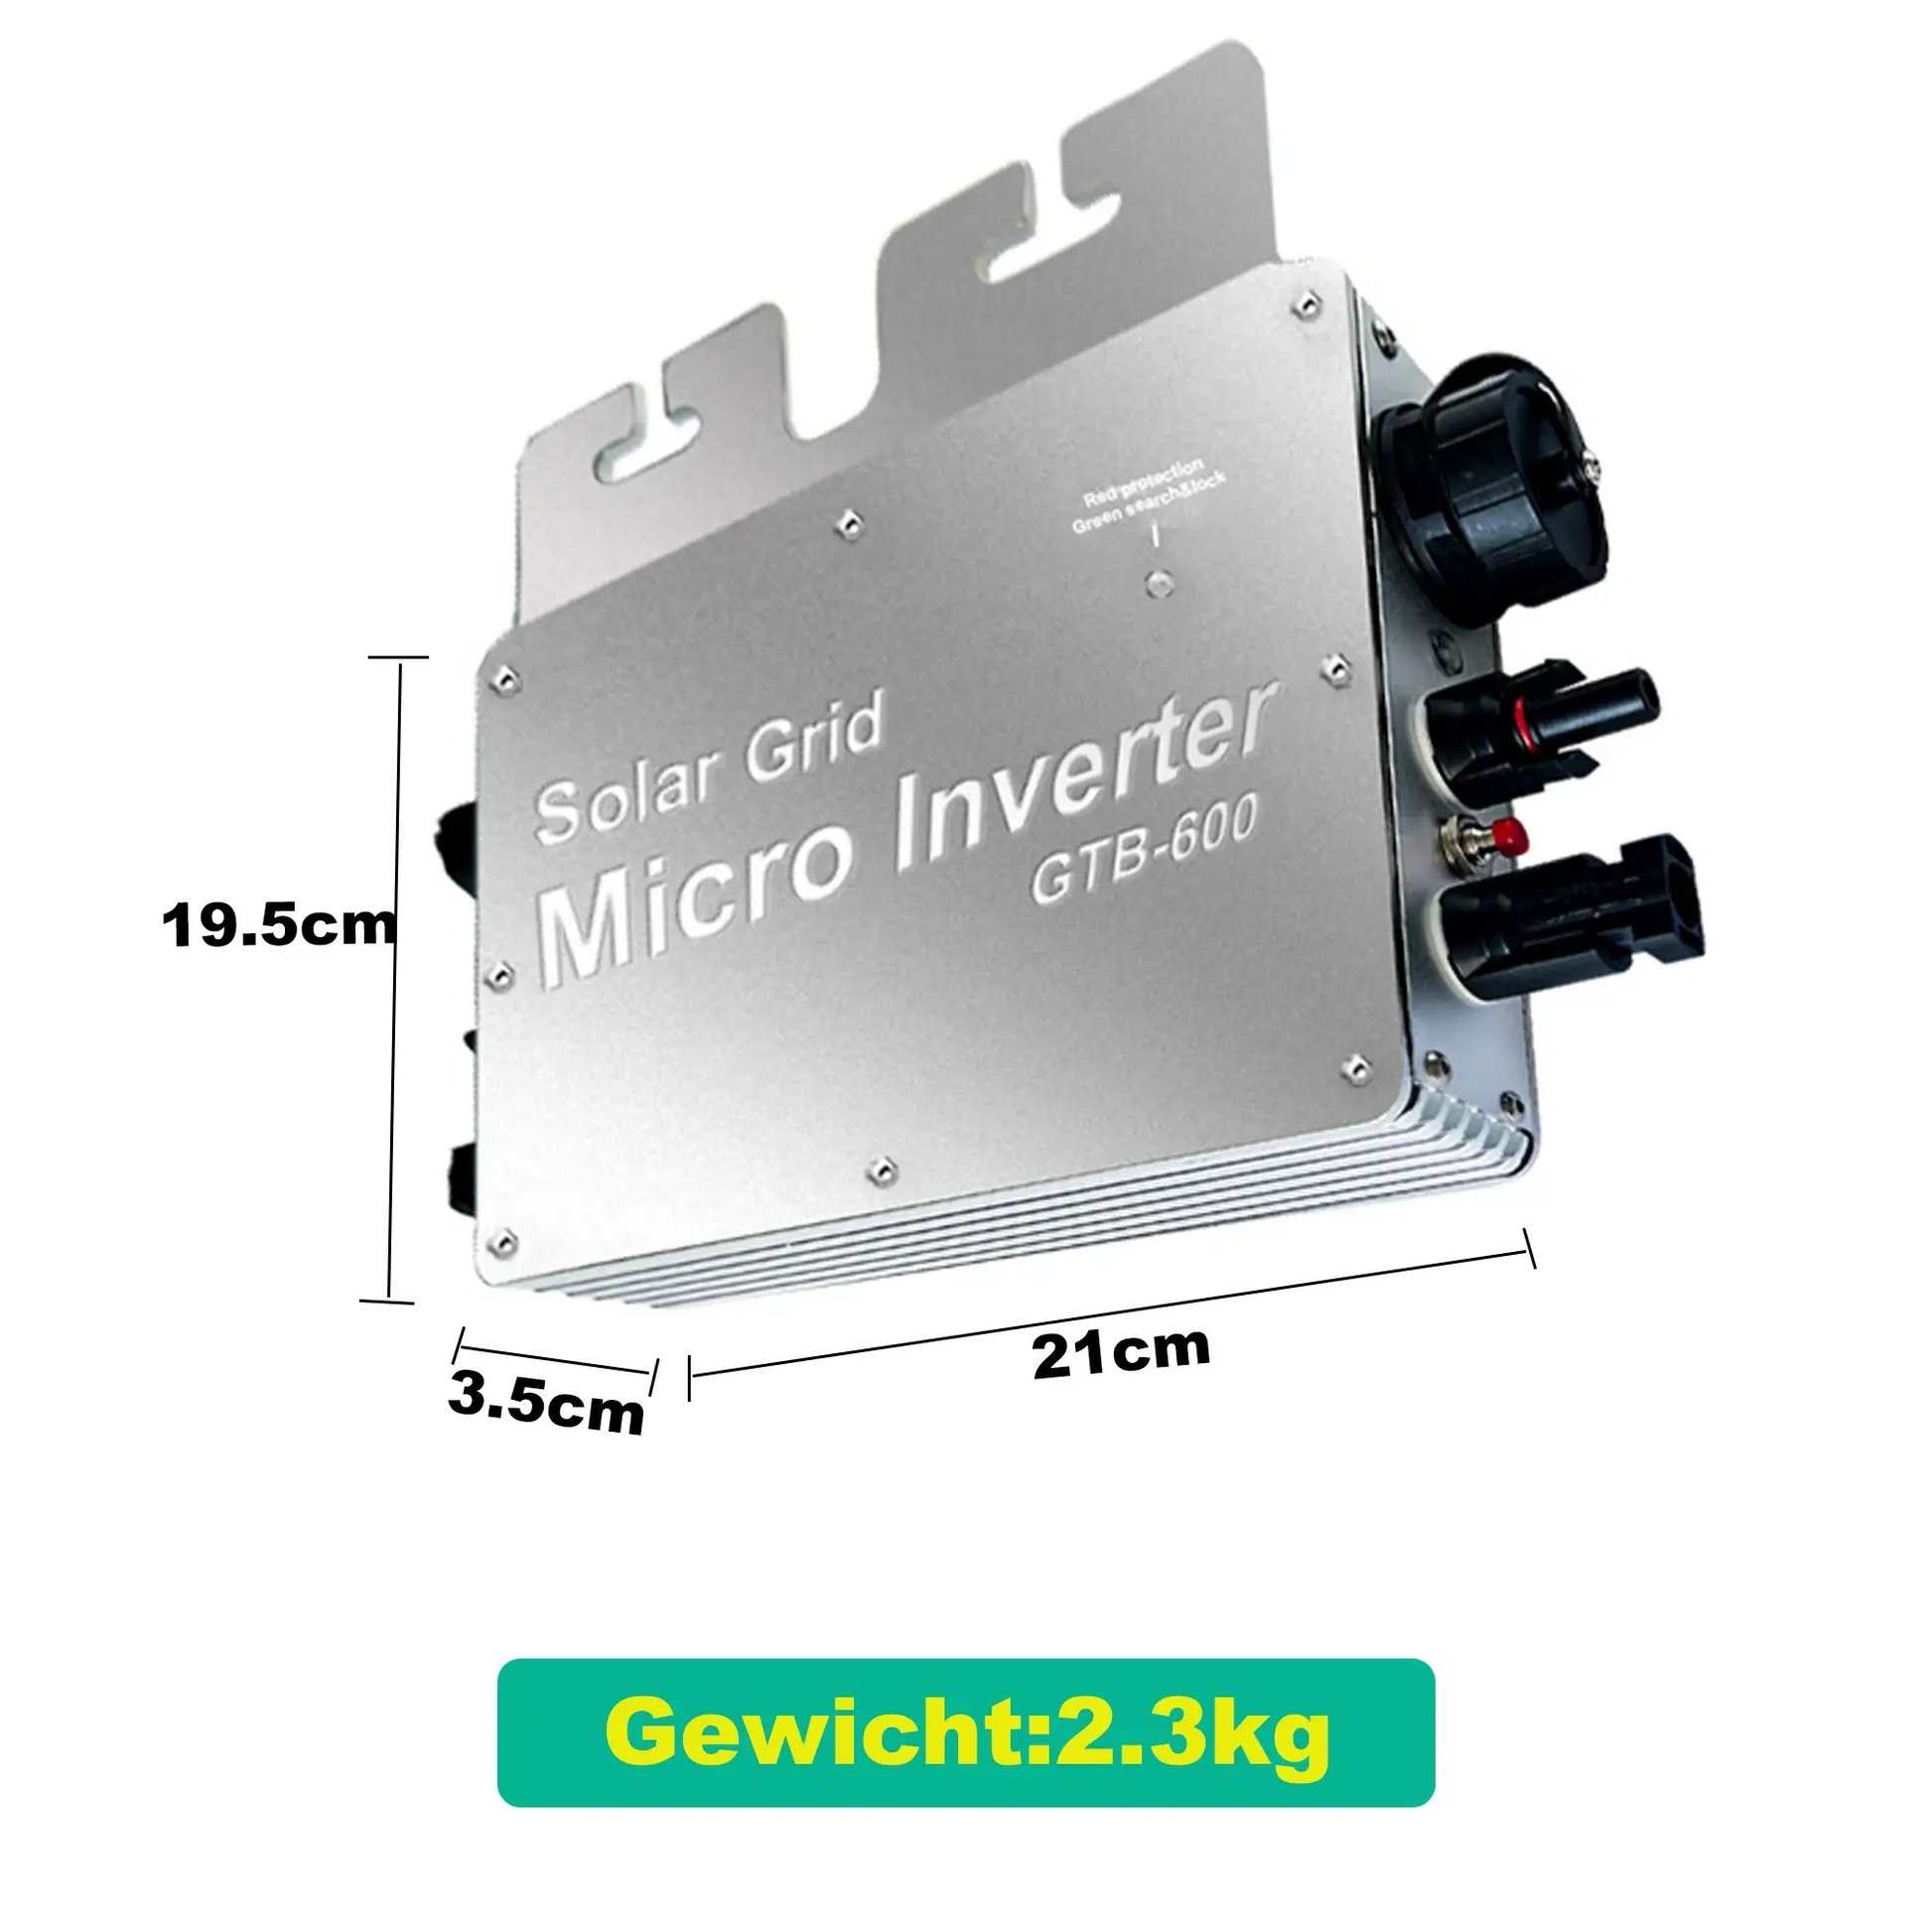 GTB 600W Reine Sinuswelle Smart Micro Wechselrichter Netzwechselrichter mit WIFI IP65 - SongSolar